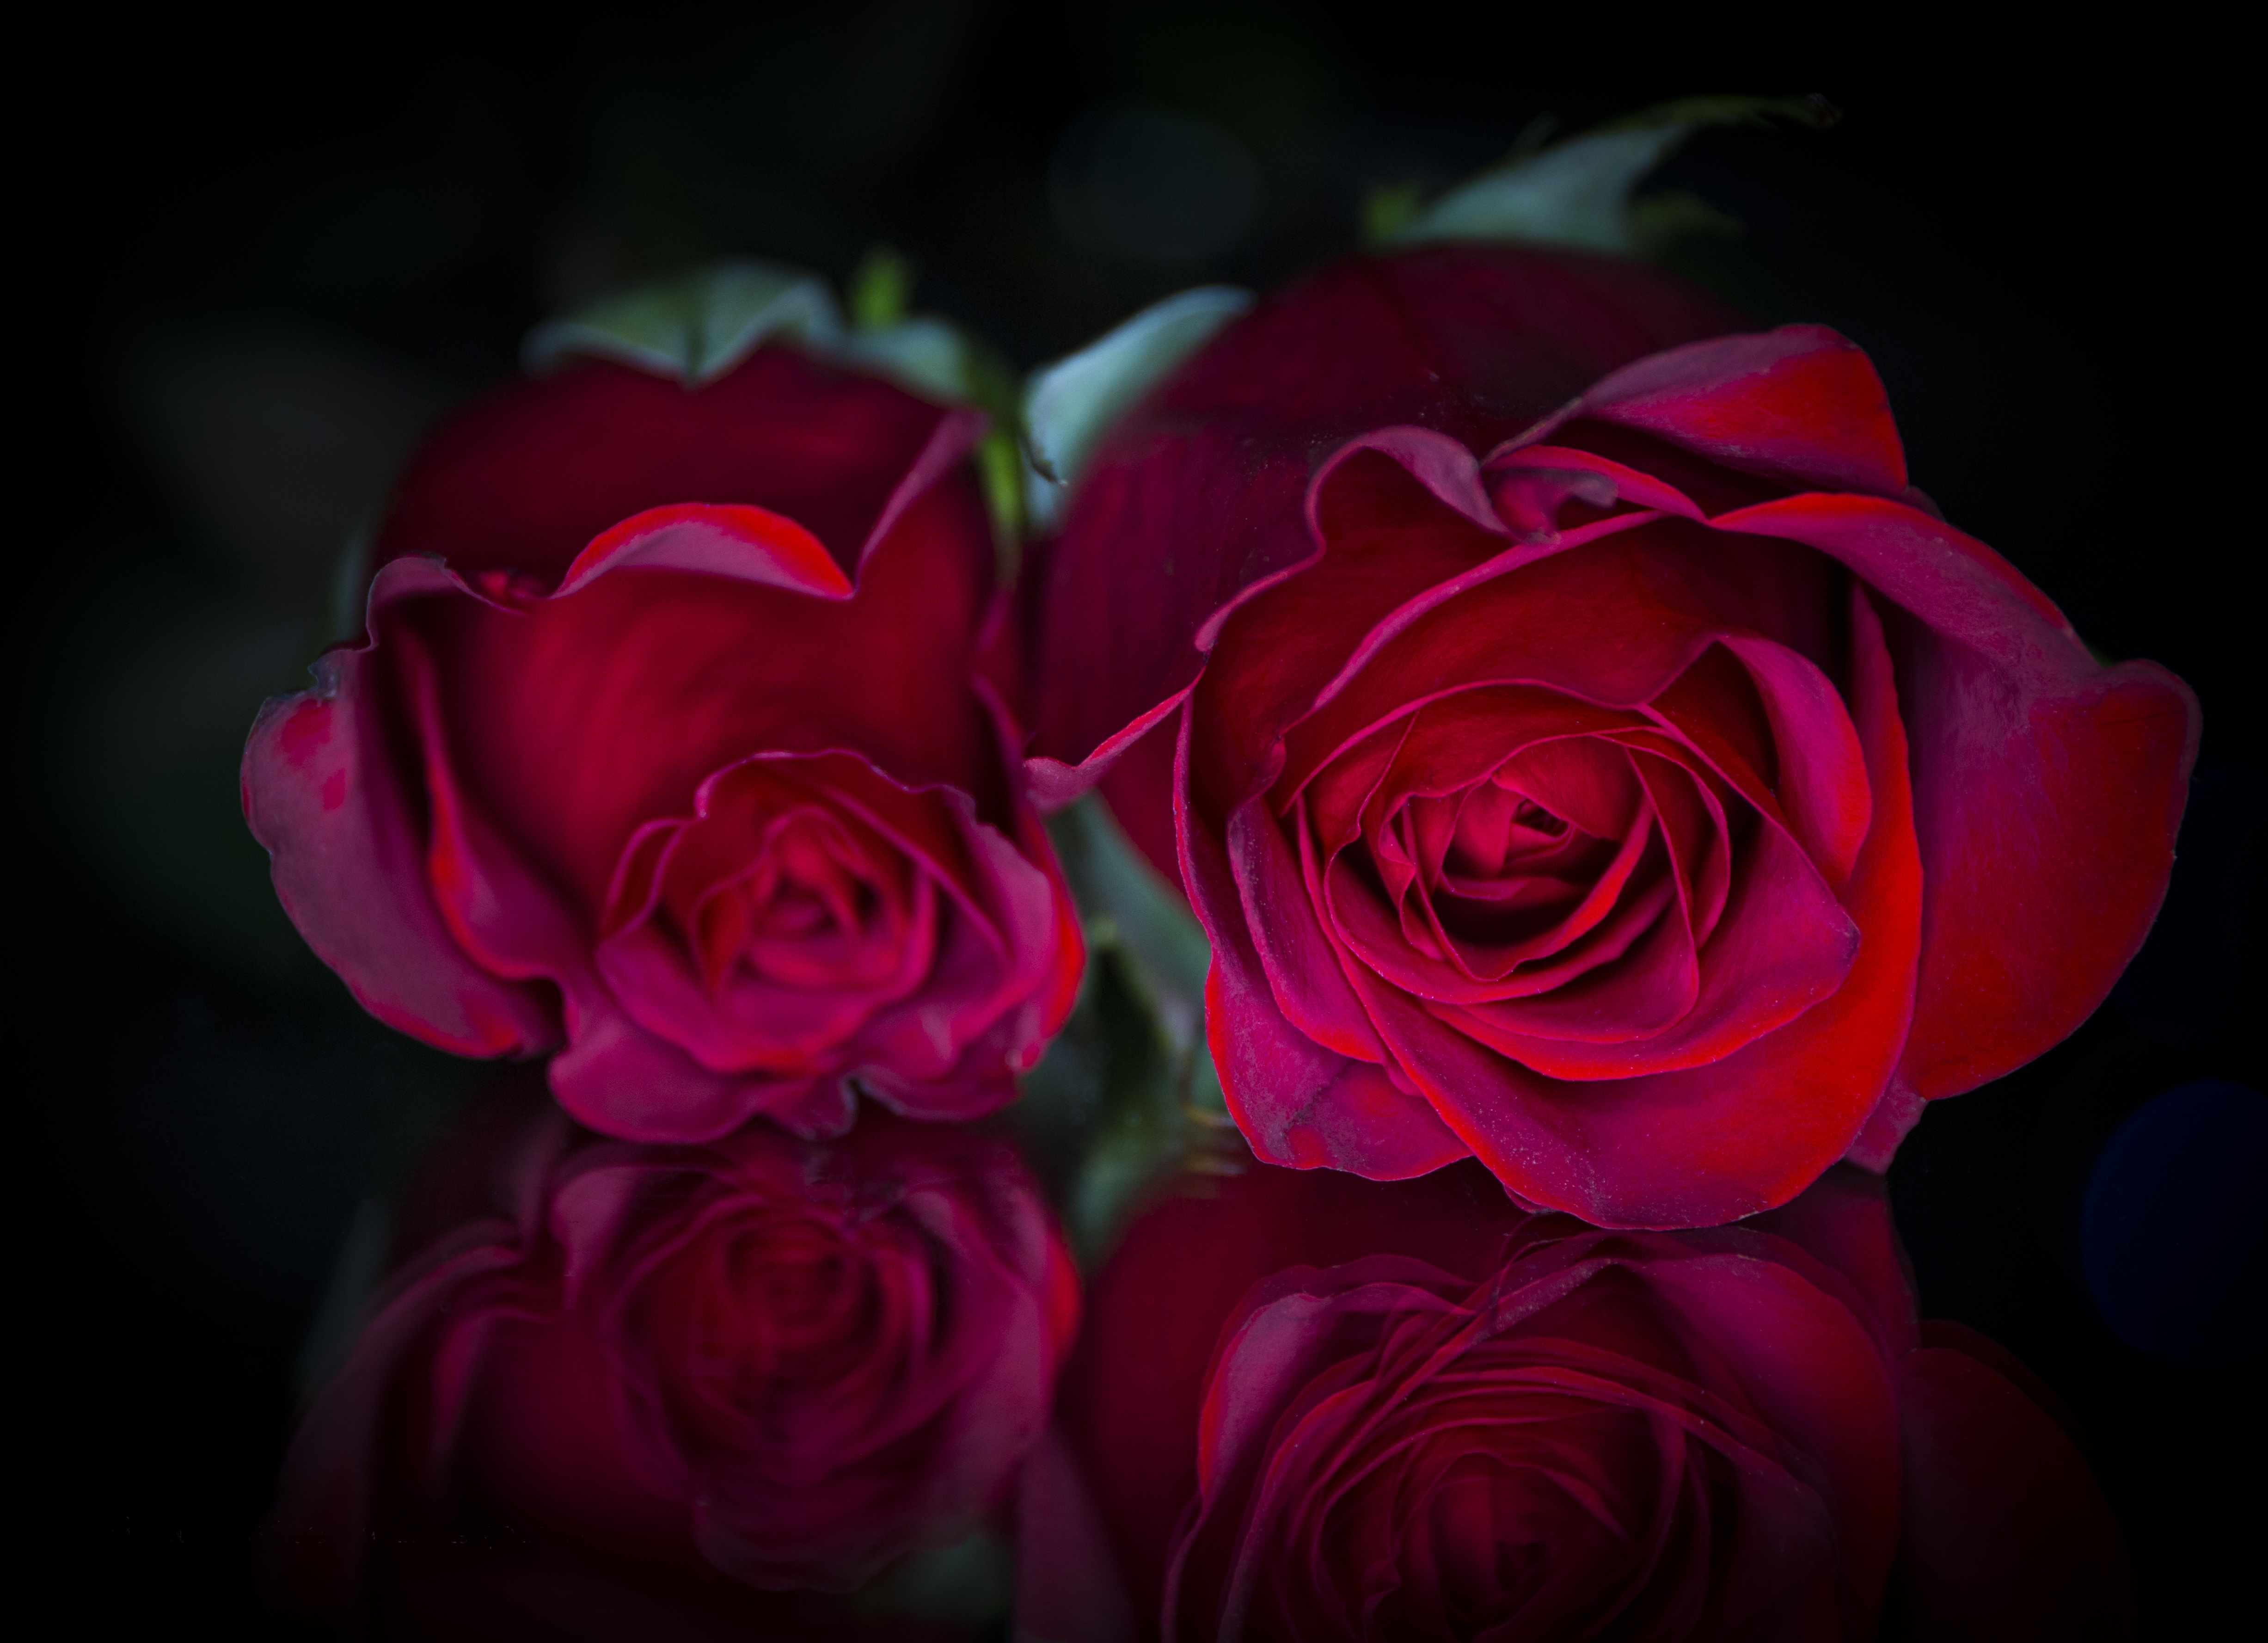 Wallpapers roses red rose rosebud on the desktop